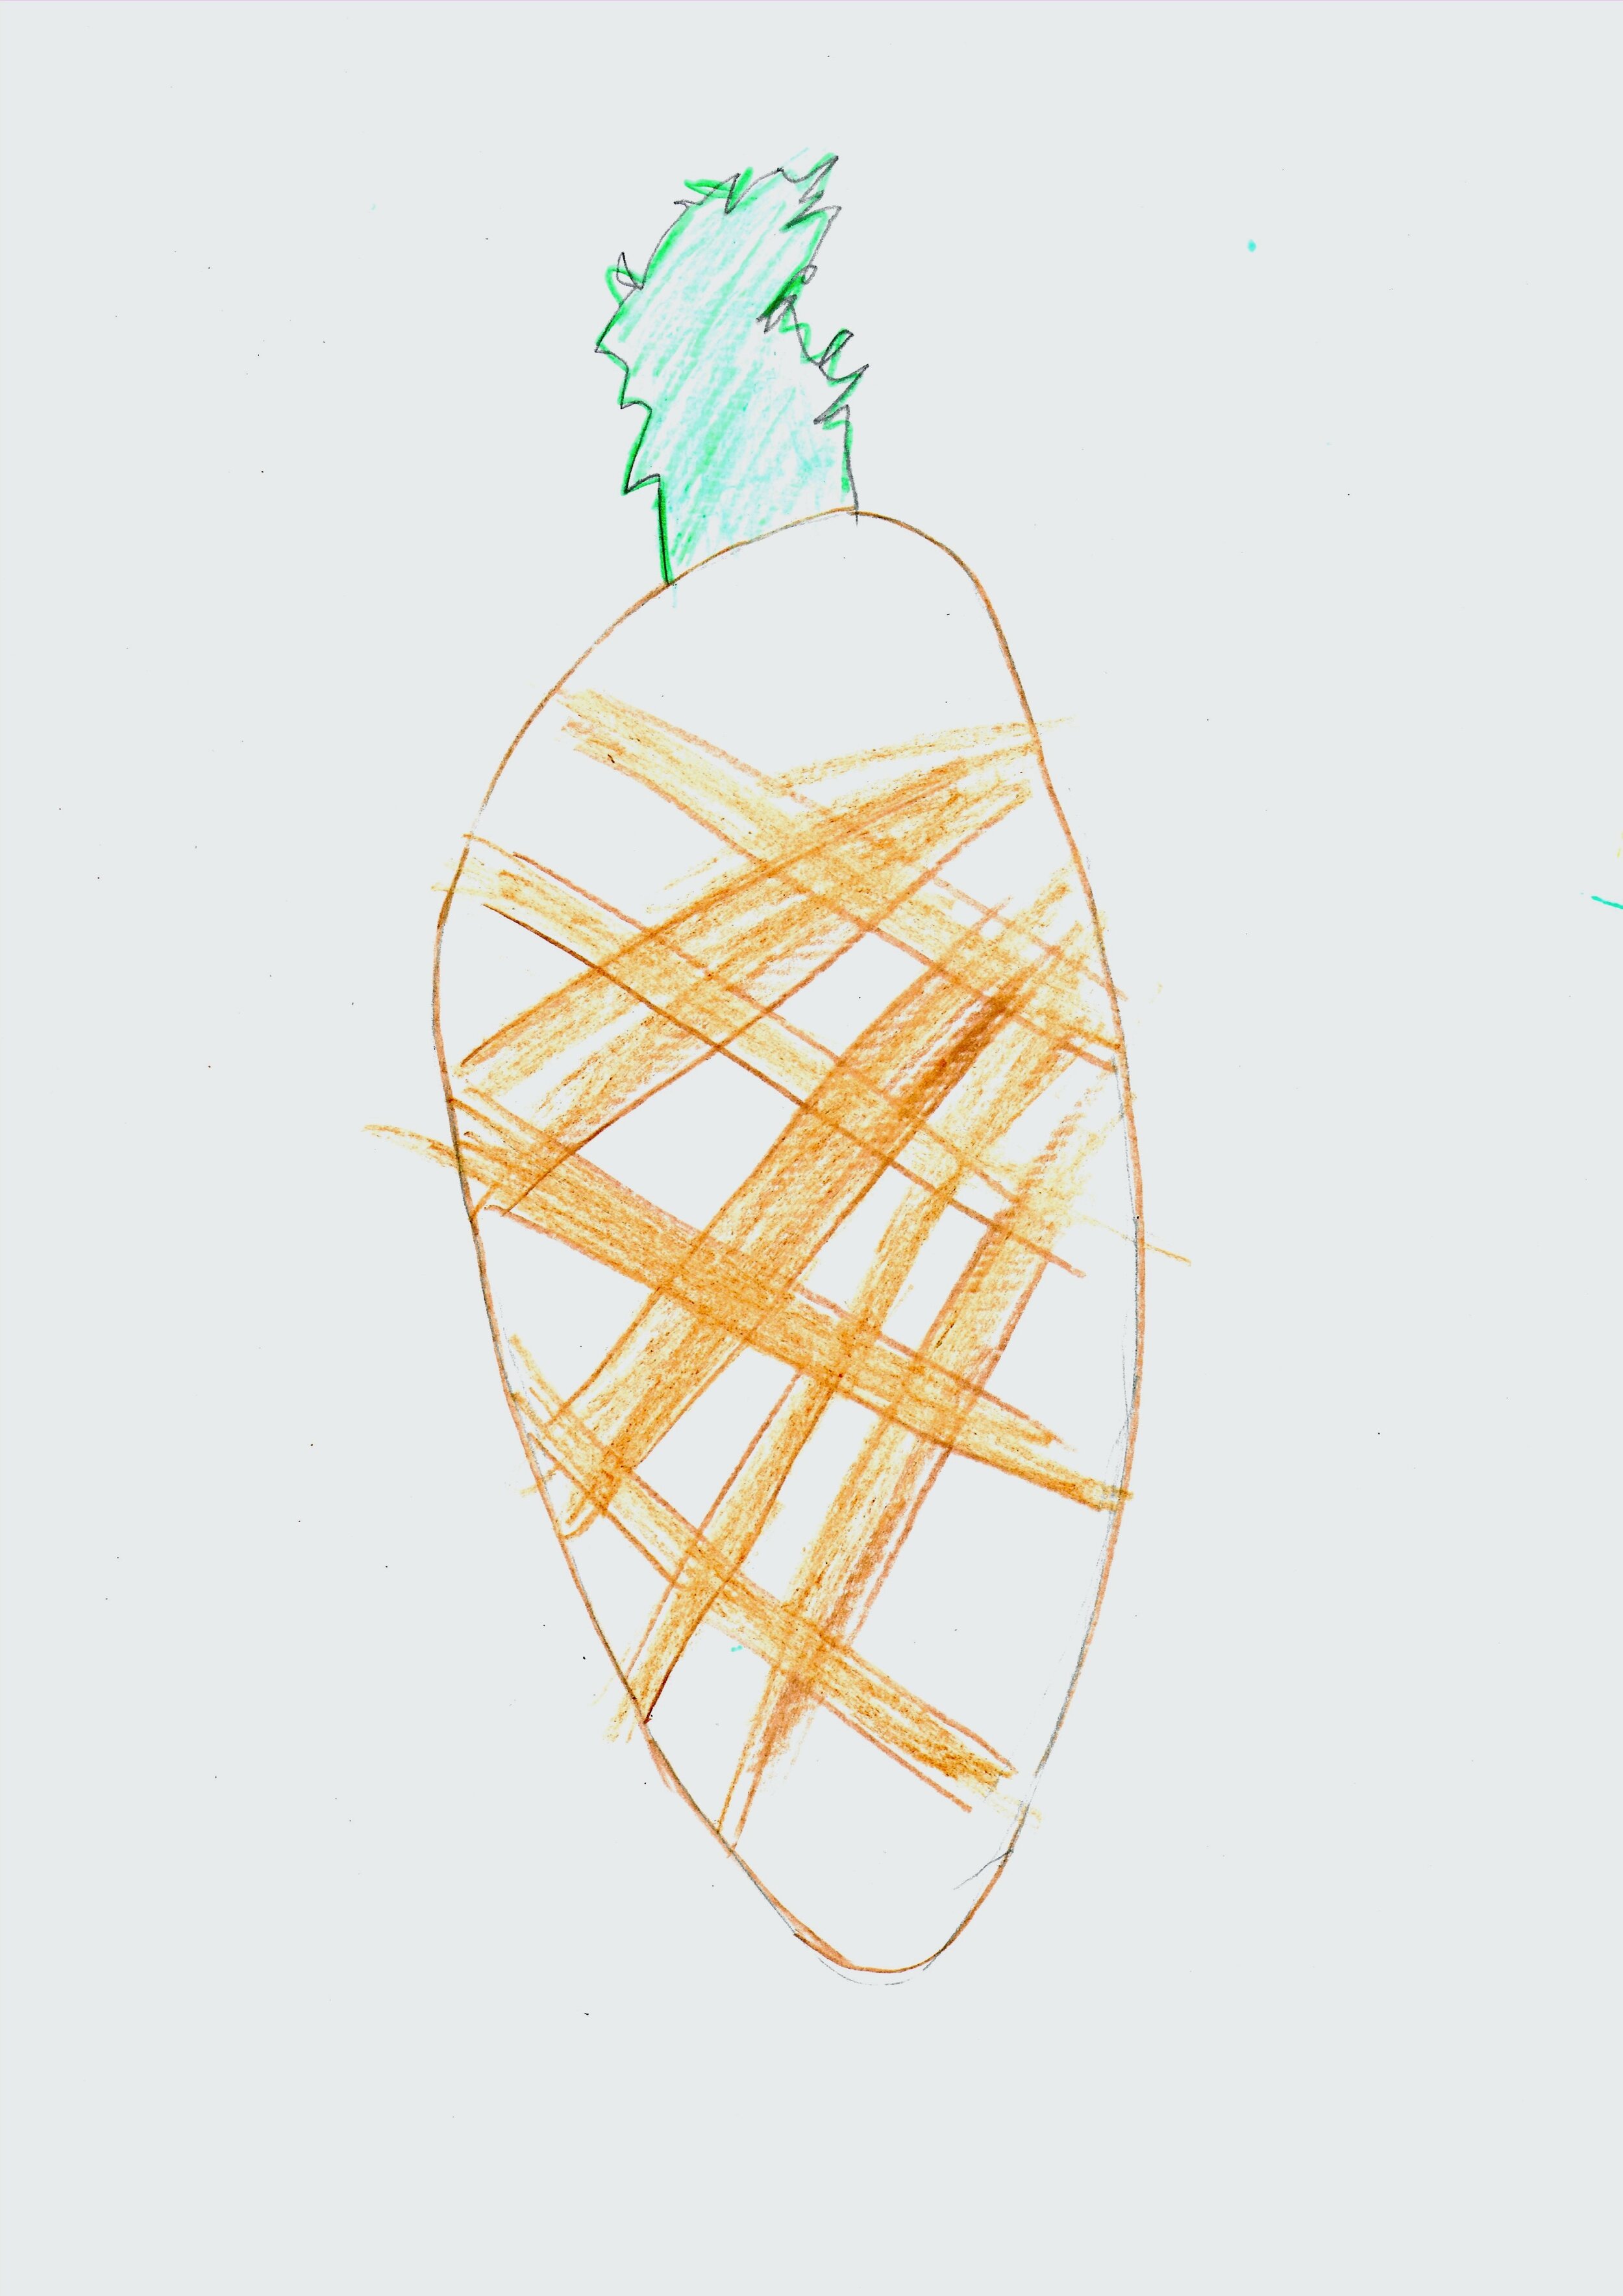 Pineapple bike rack design sketch by pupil at Blackness Primary School